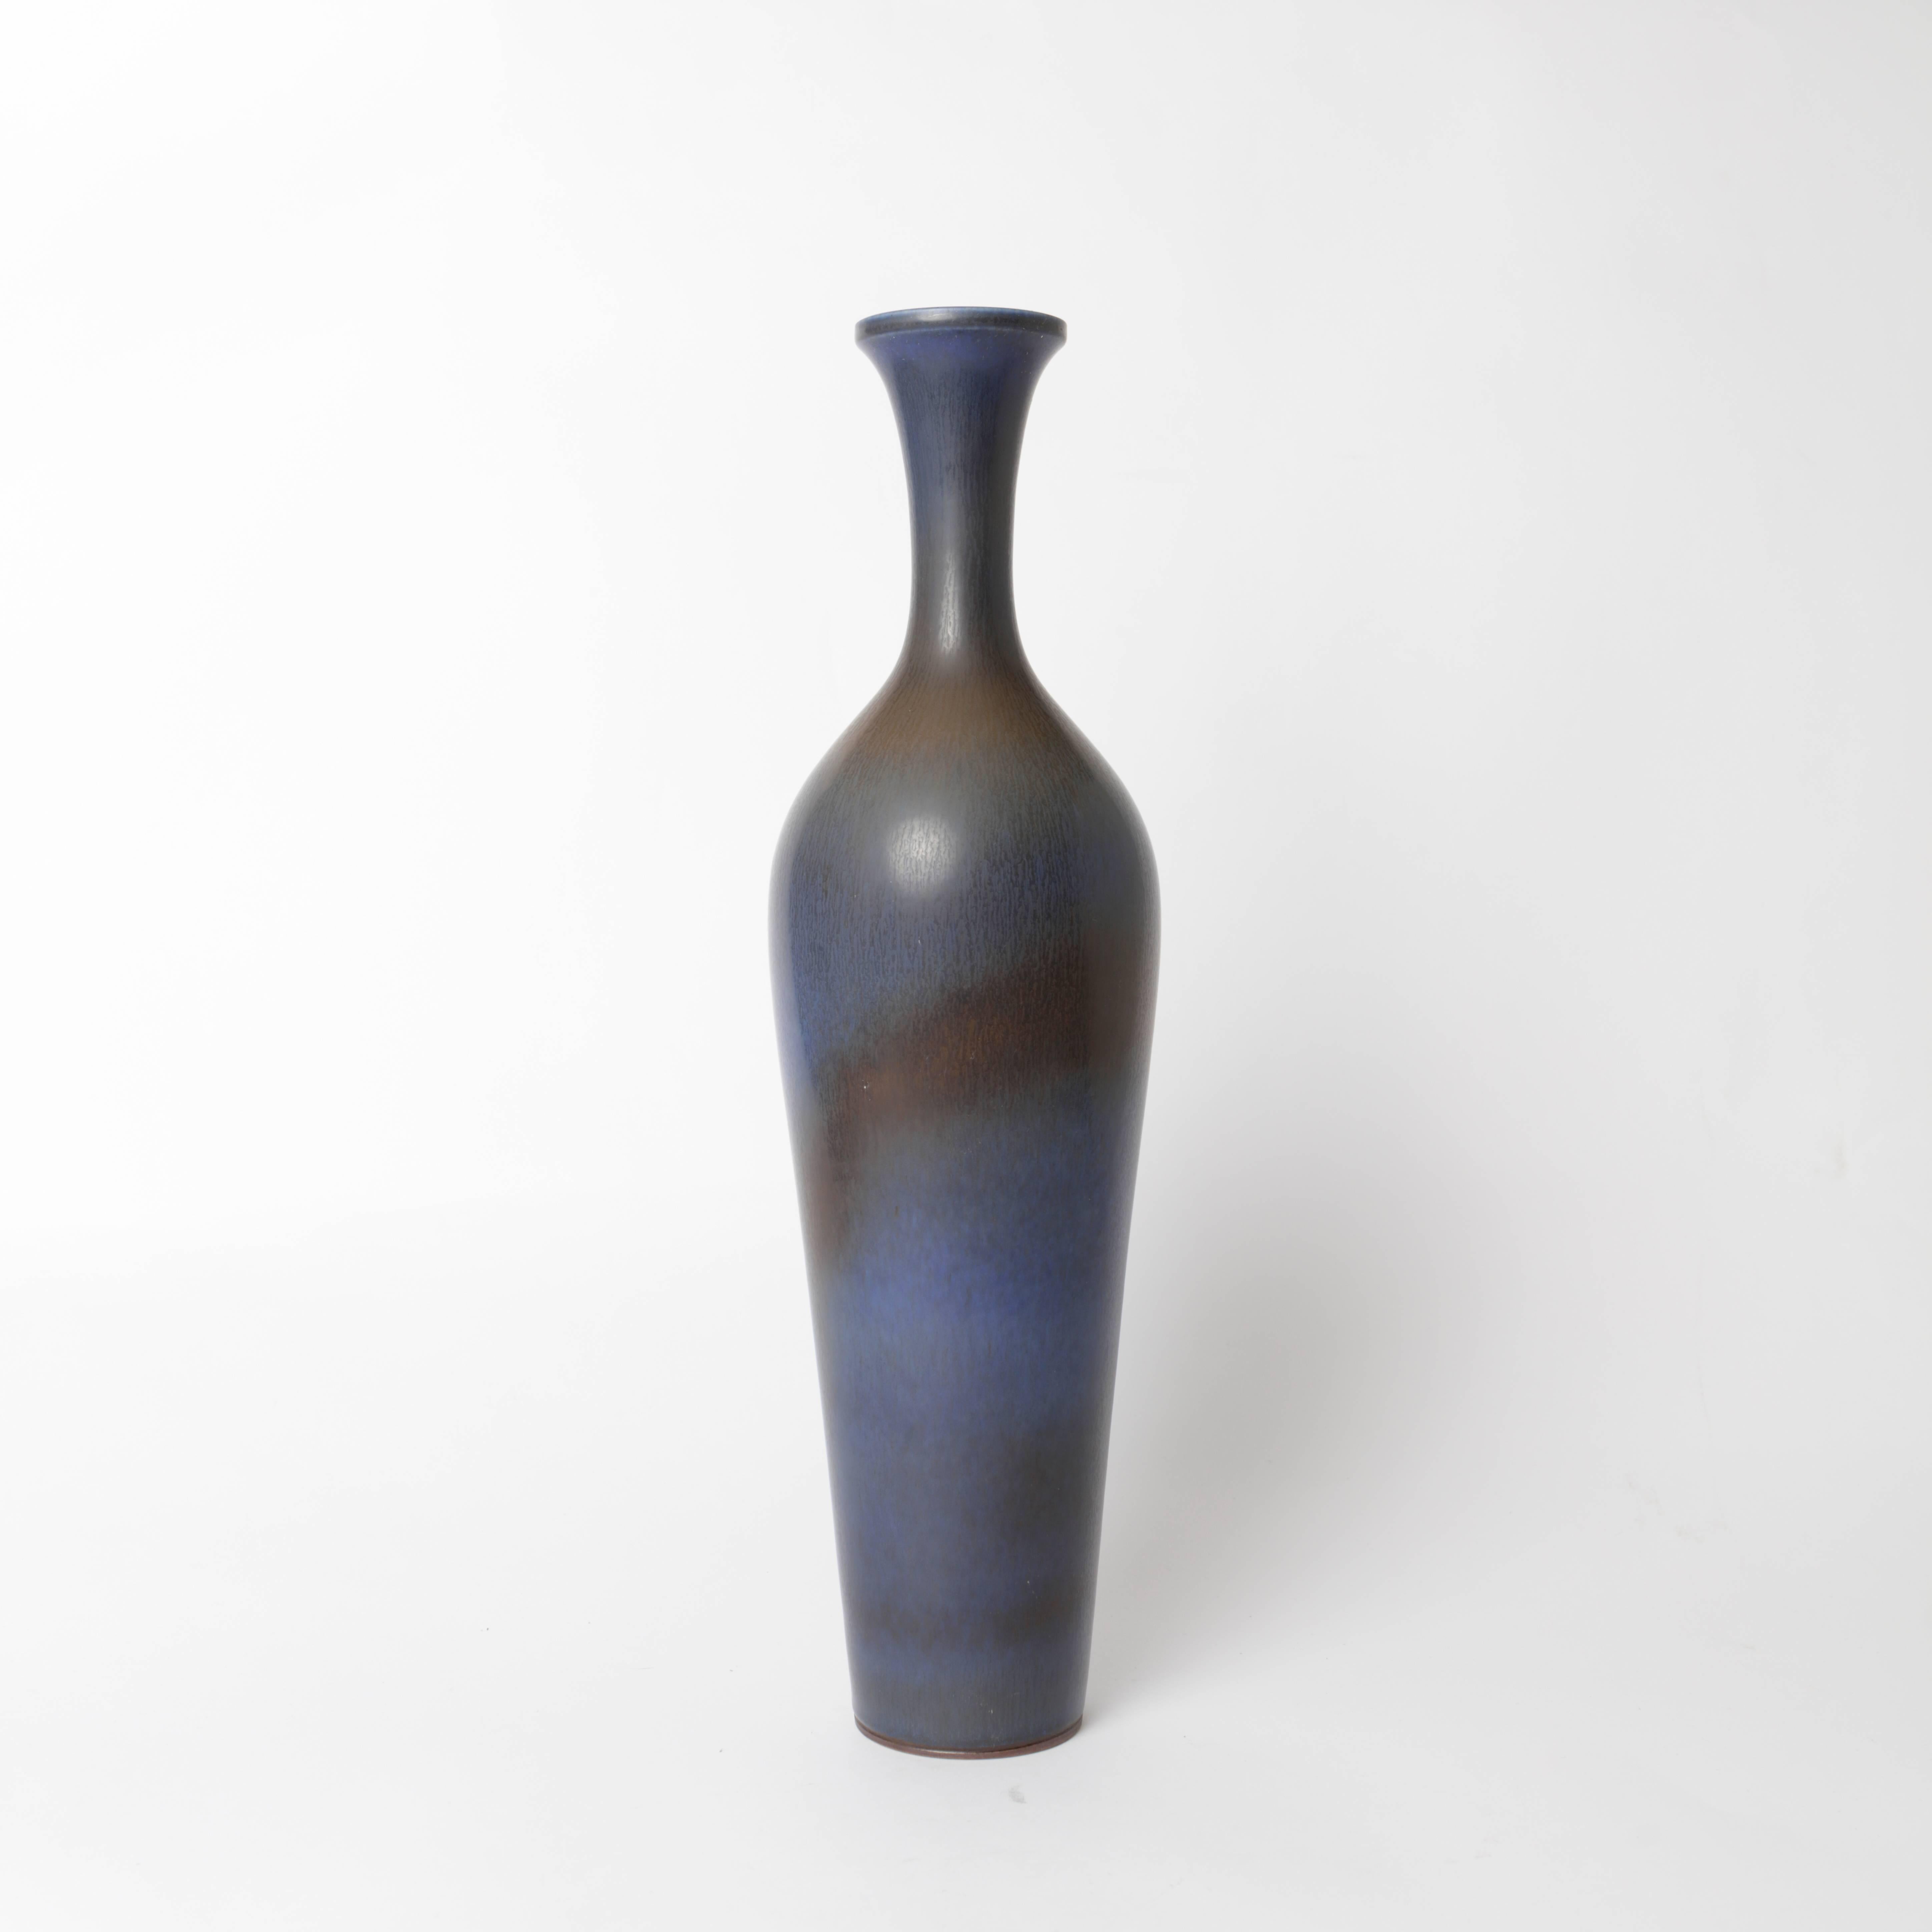 Unique stoneware vase by Berndt Friberg for Gustavsberg 1962 with harefur glaze.
Measure: Height 44cm/17.3